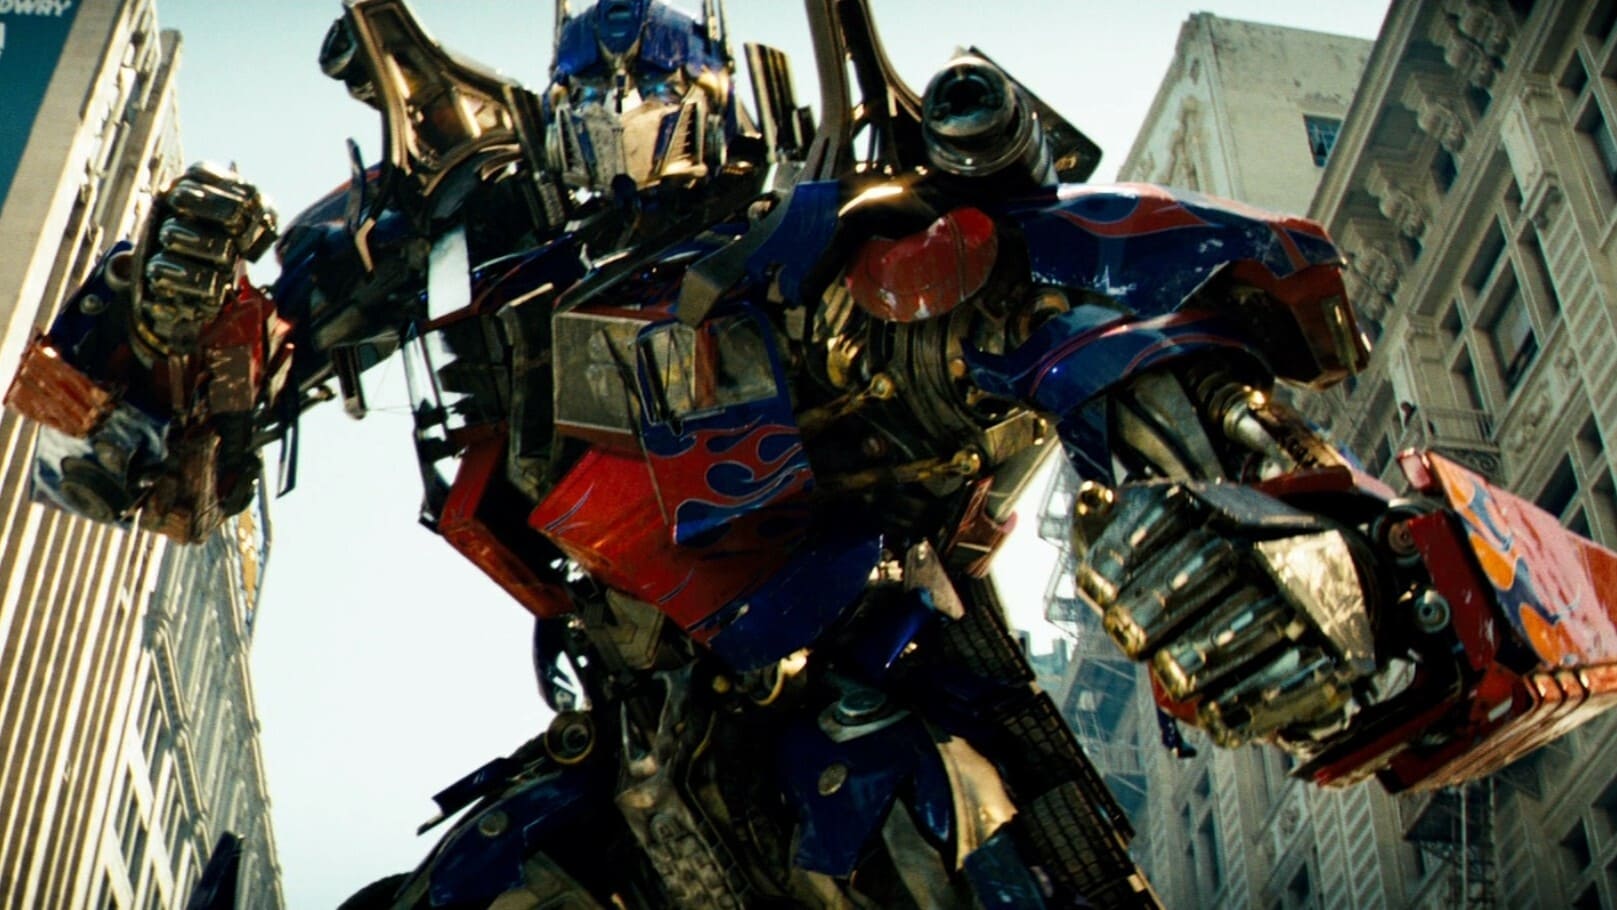 Transformers backdrop